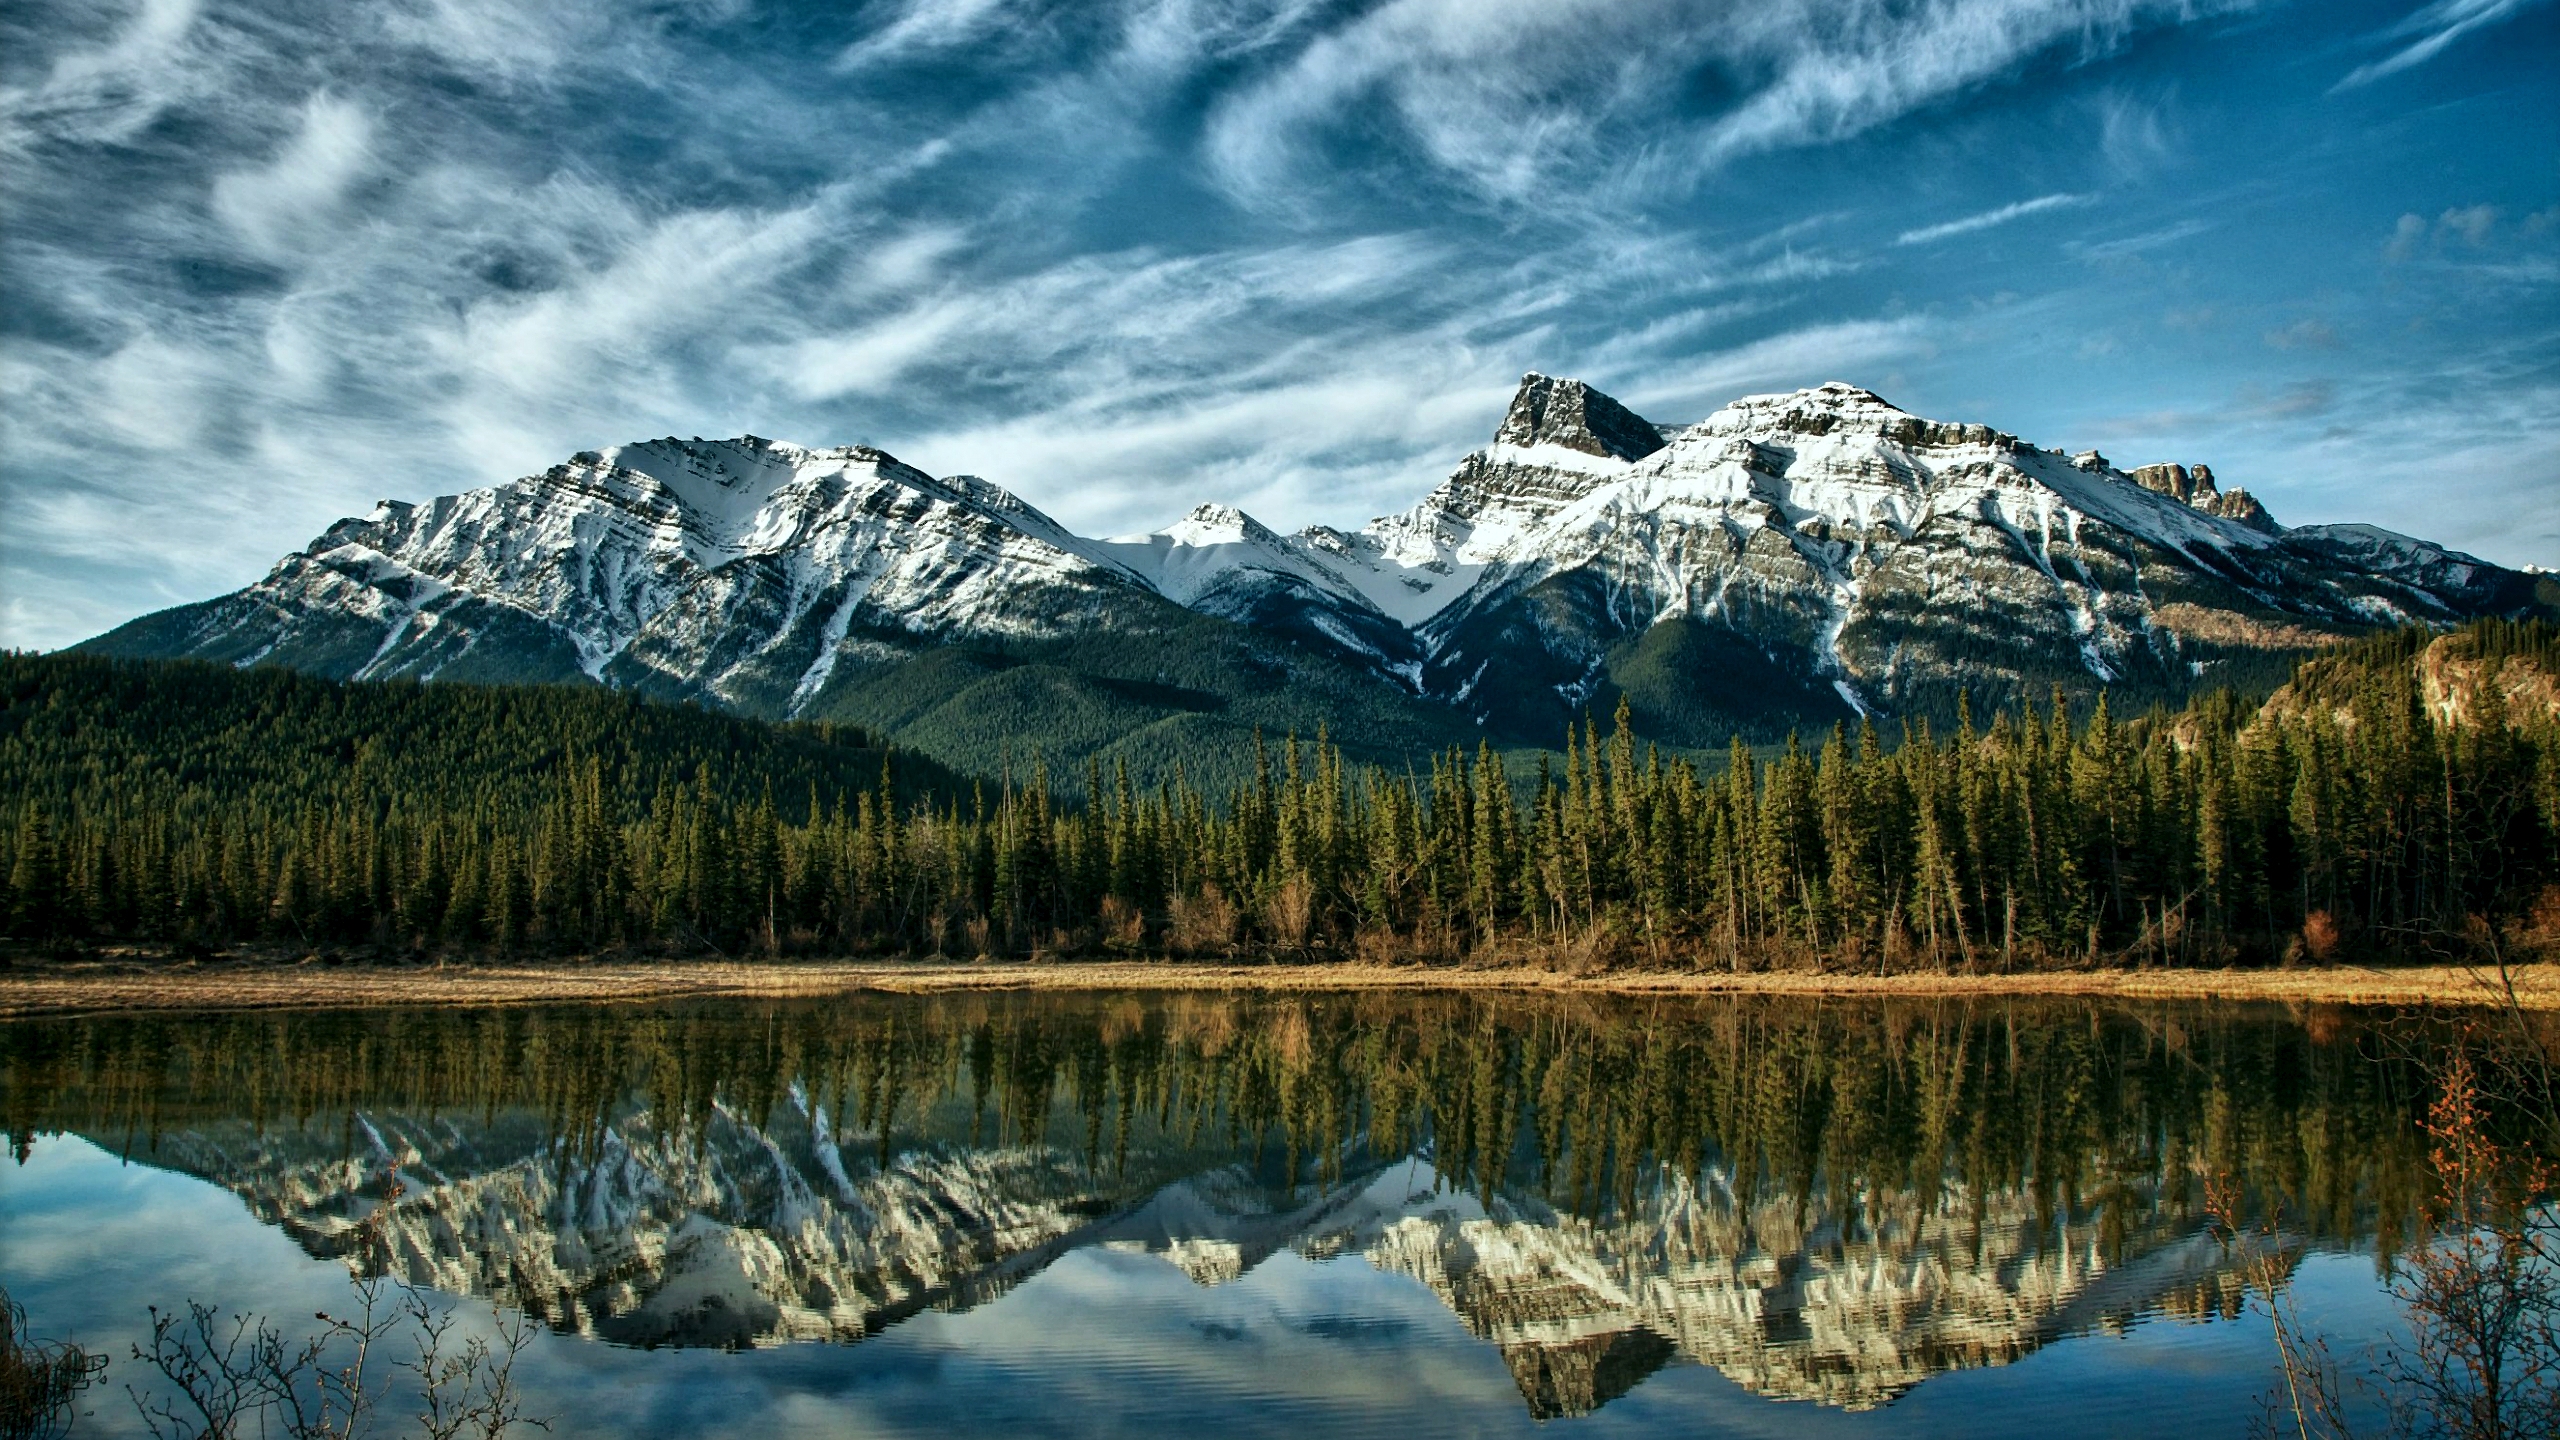 Alberta Mountains Canada for 2560x1440 HDTV resolution